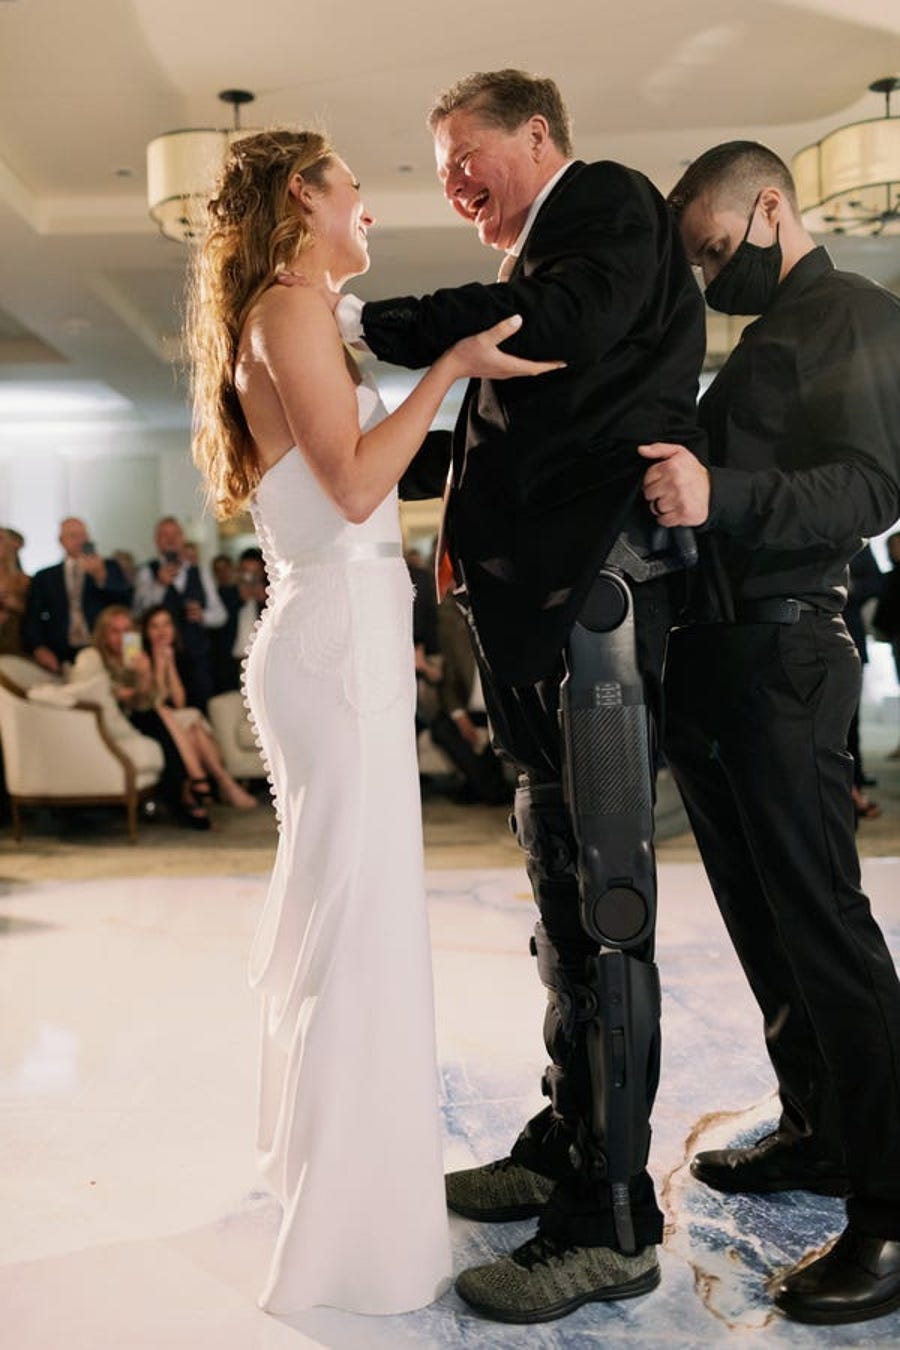 Sam Schmidt dances with his daughter, Savannah, at her wedding.